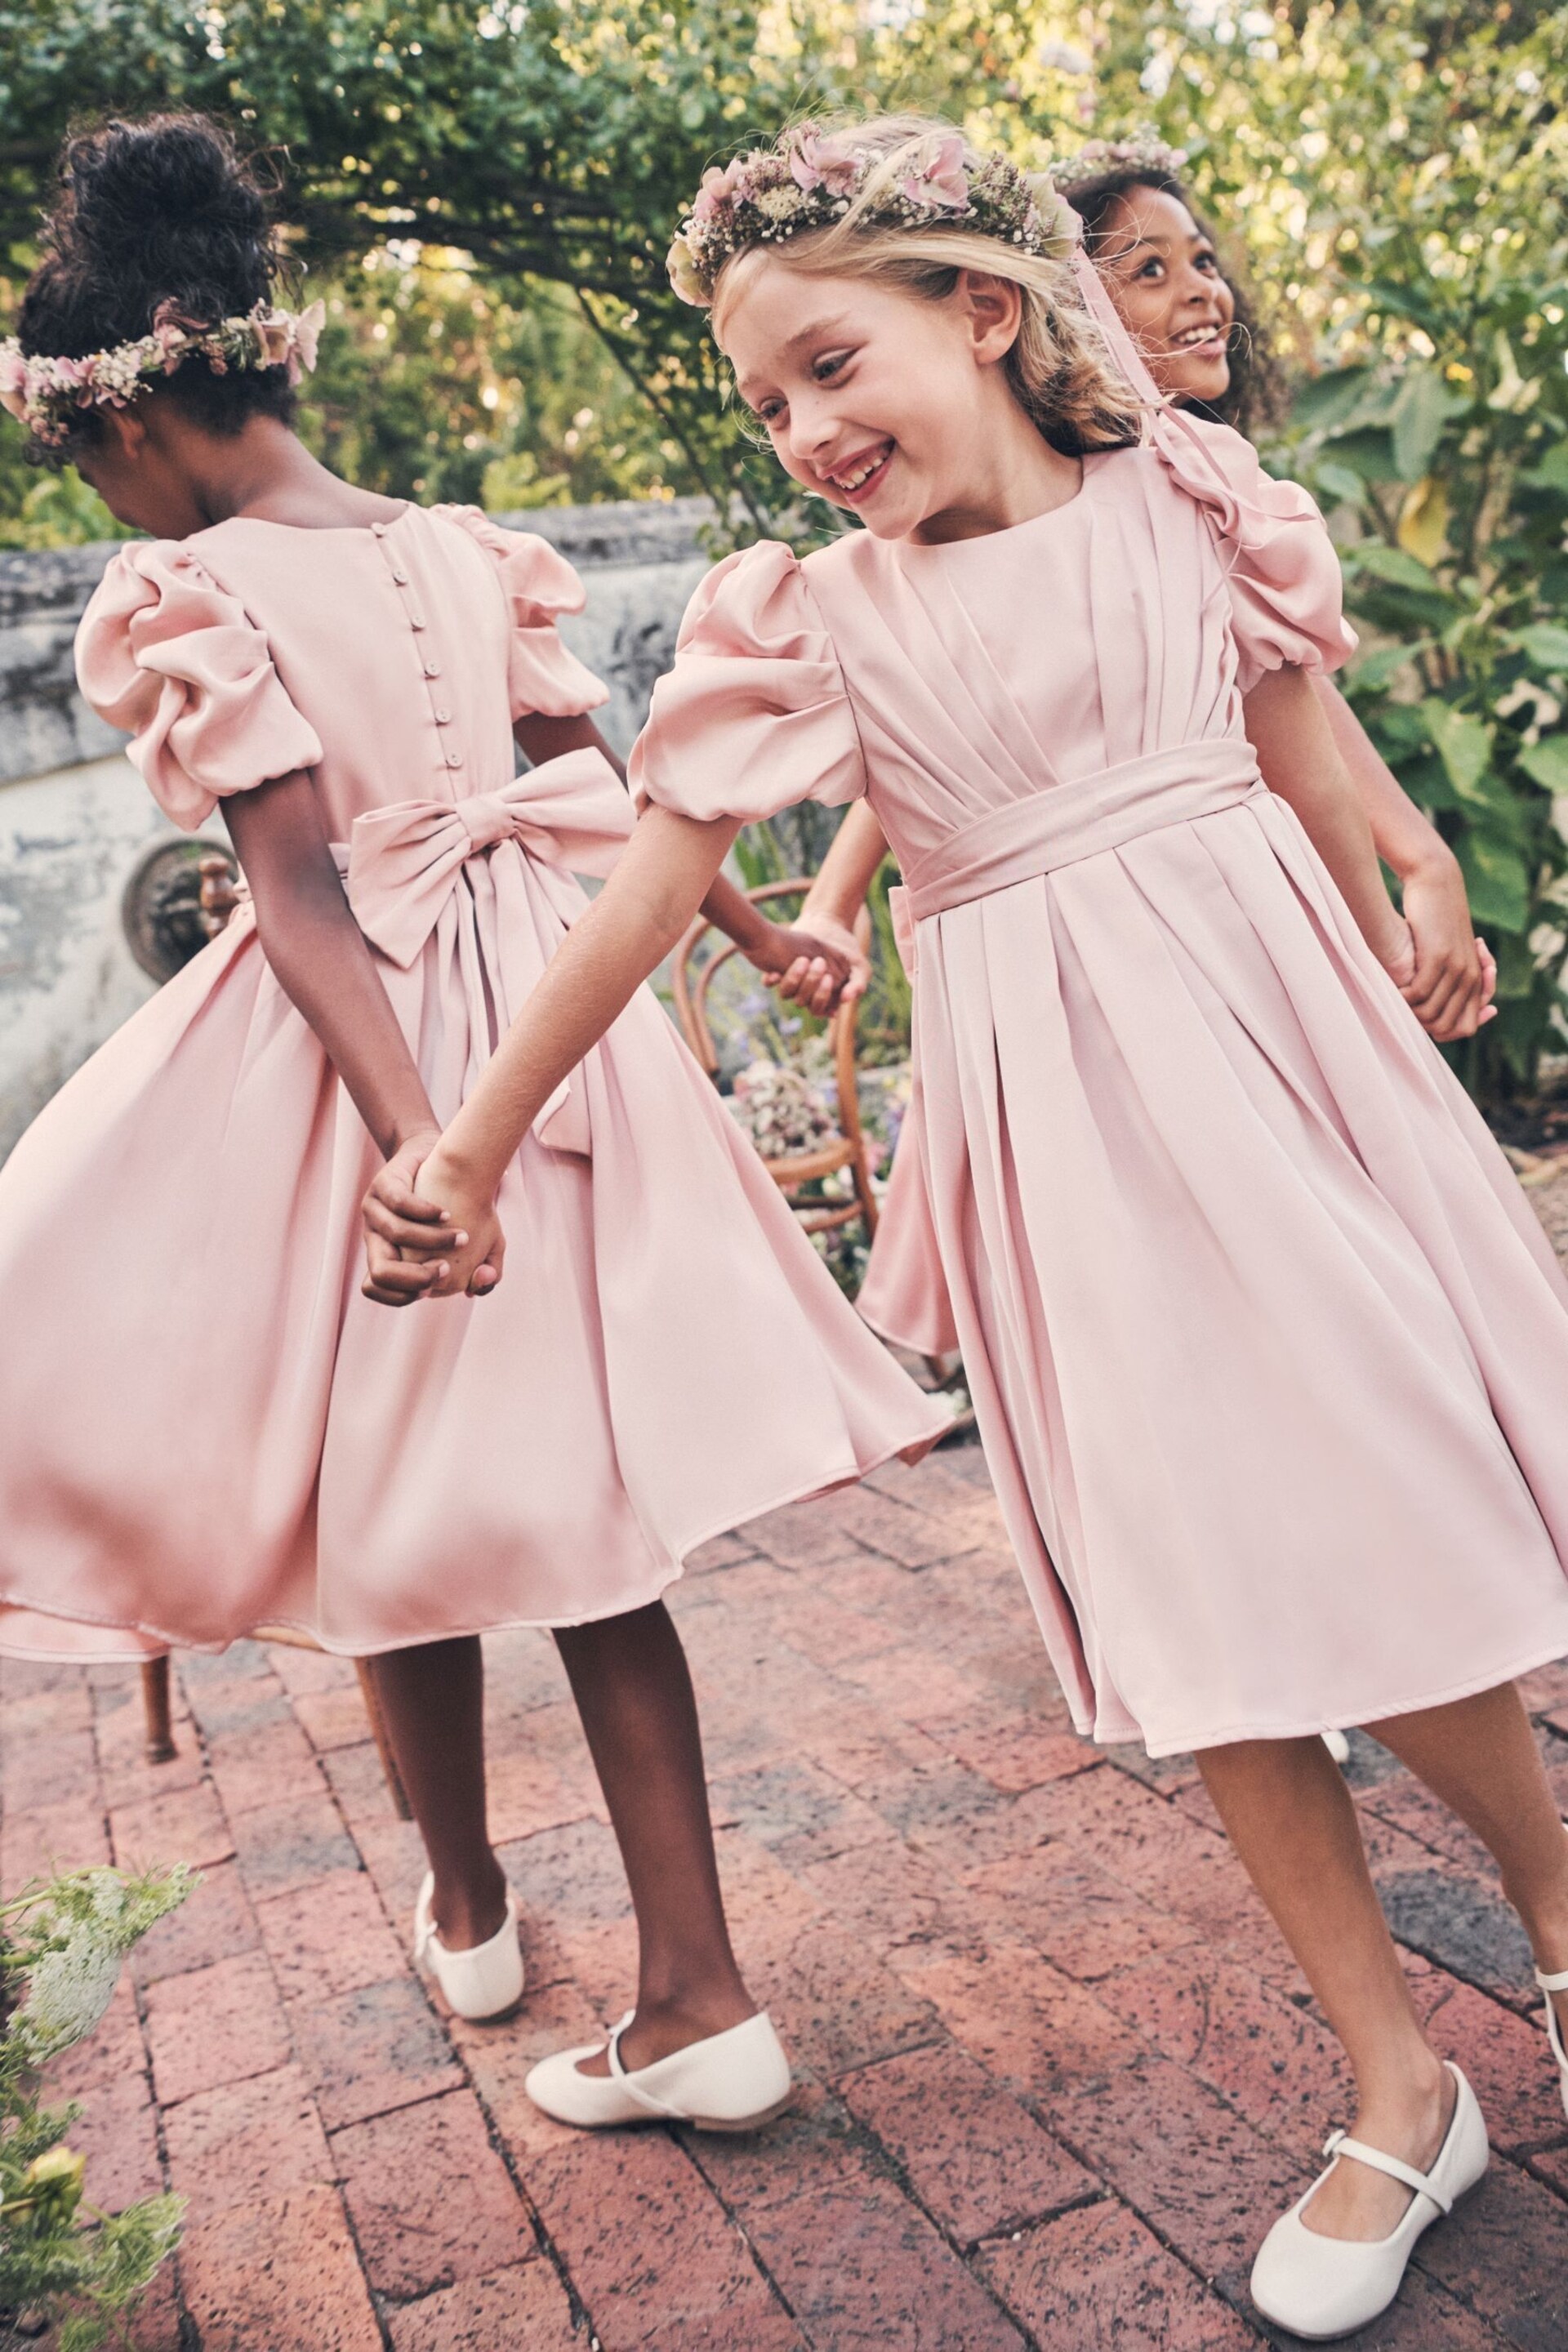 Angel & Rocket Blush Pink Portia Pleated Bodice Bow Dress - Image 1 of 9